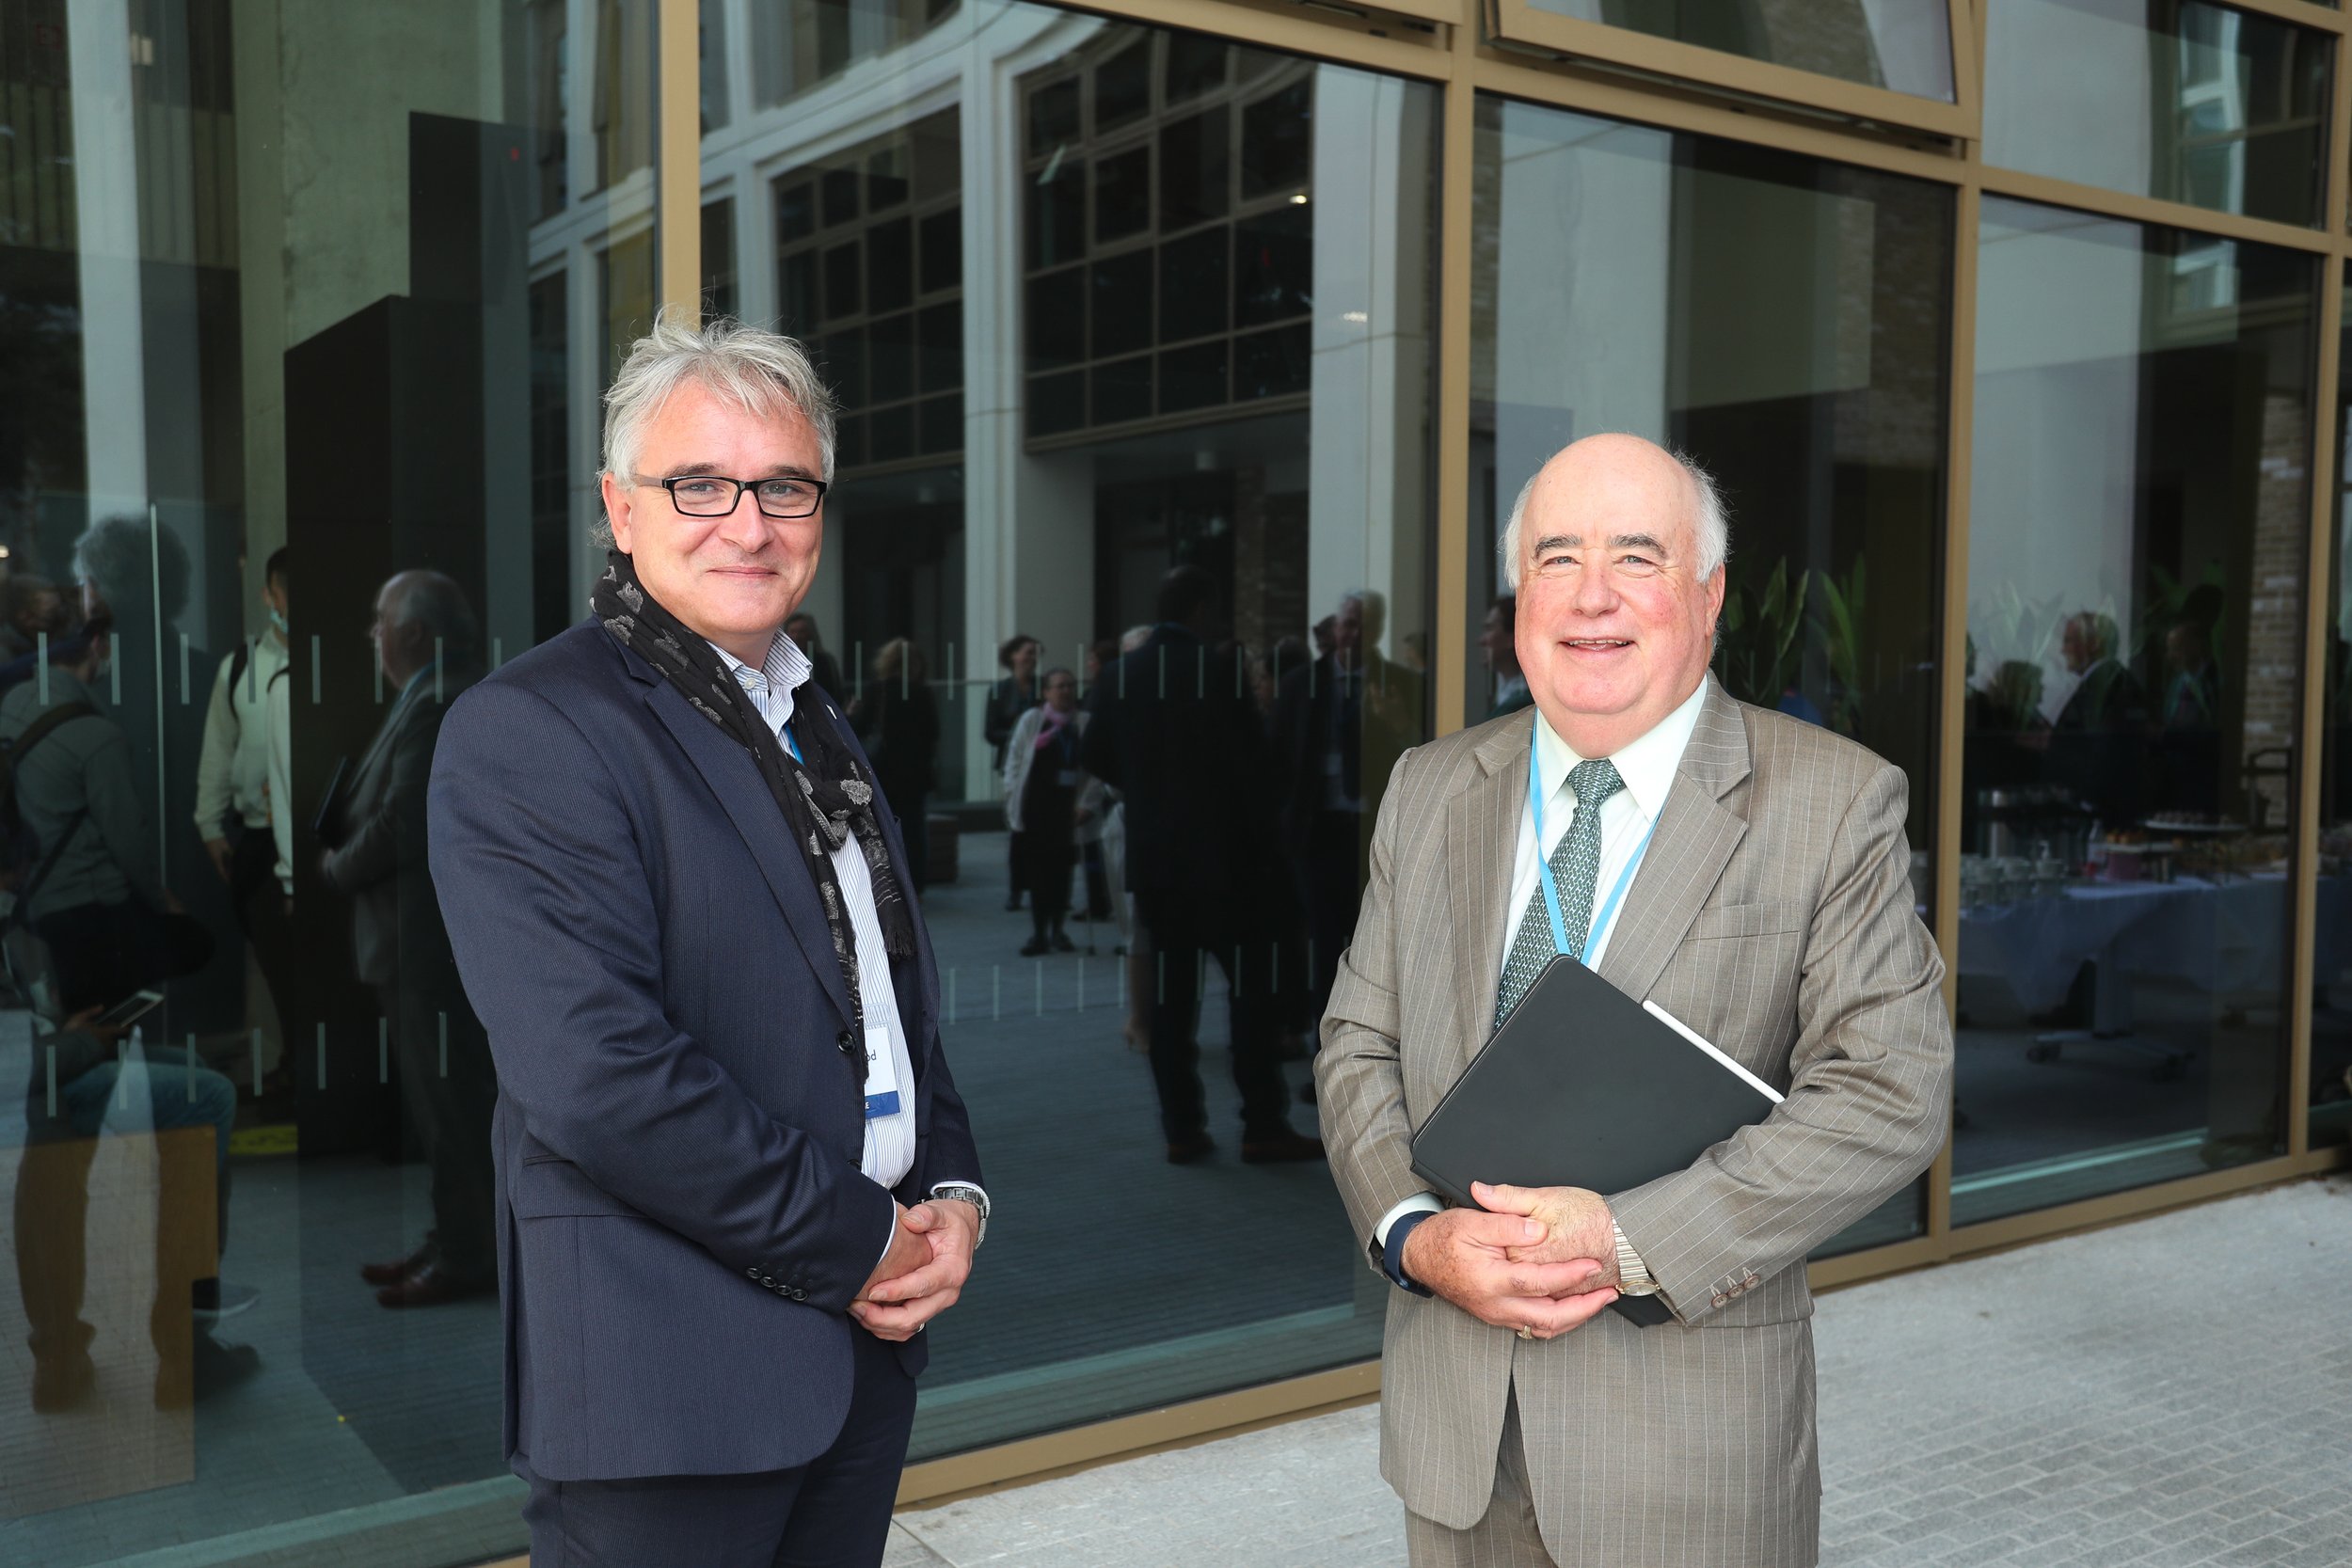  Robert Flood, Head of International Affairs, TU Dublin with Michael Horgan, Chairperson, Higher Education Authority. 